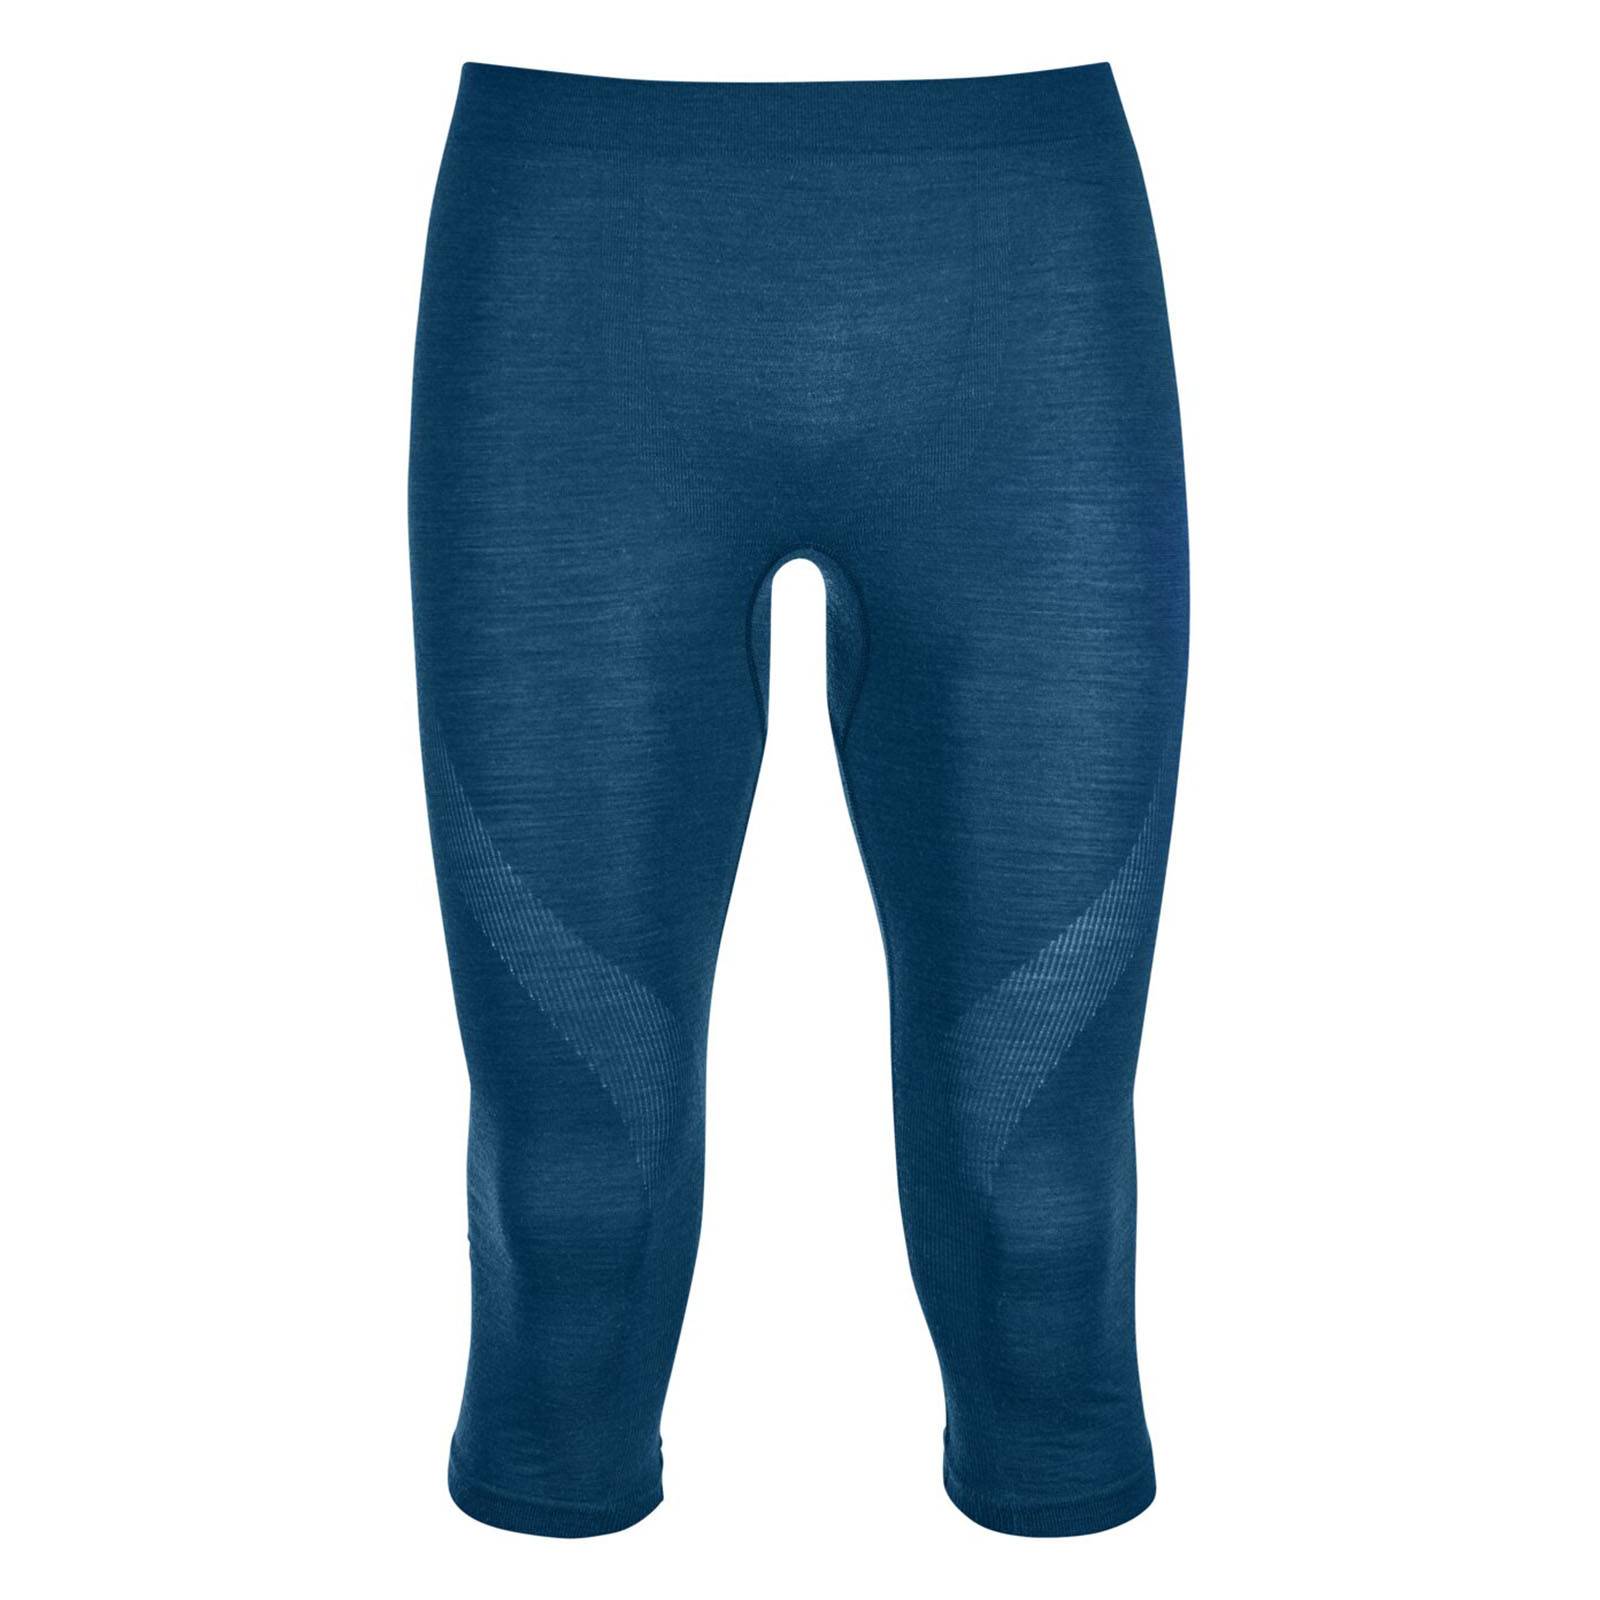 Ortovox 120 Comp Light Short Pants Herren  3/4 Unterhosen petrol blue